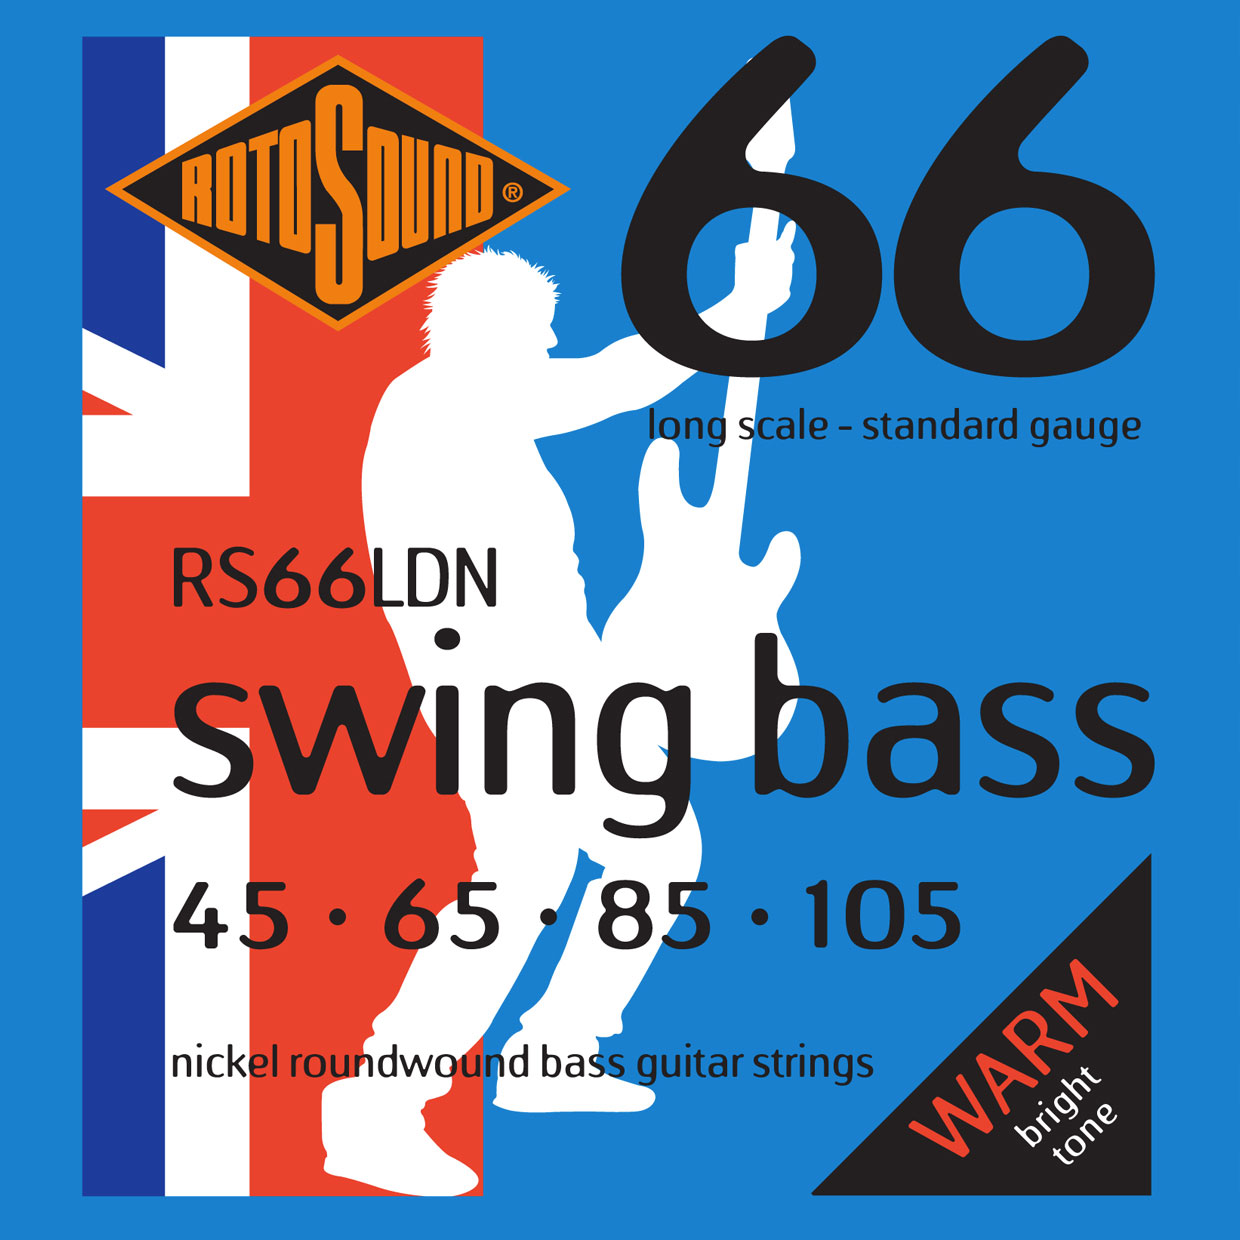 ROTOSOUND SWING BASS 66 RS66LDN NICKEL 45105